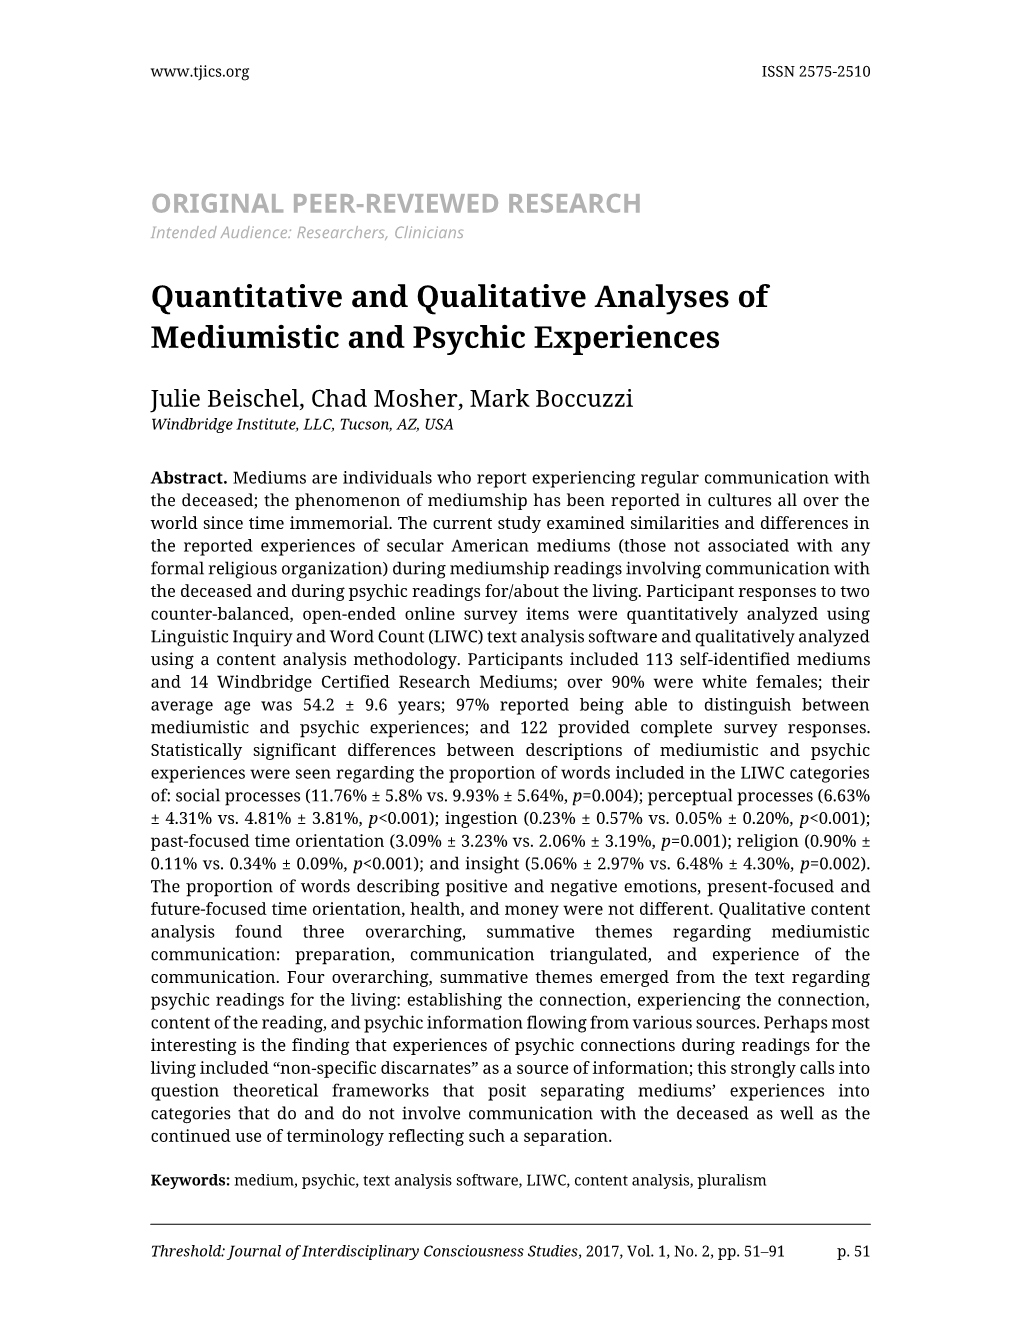 Quantitative and Qualitative Analyses of Mediumistic and Psychic Experiences